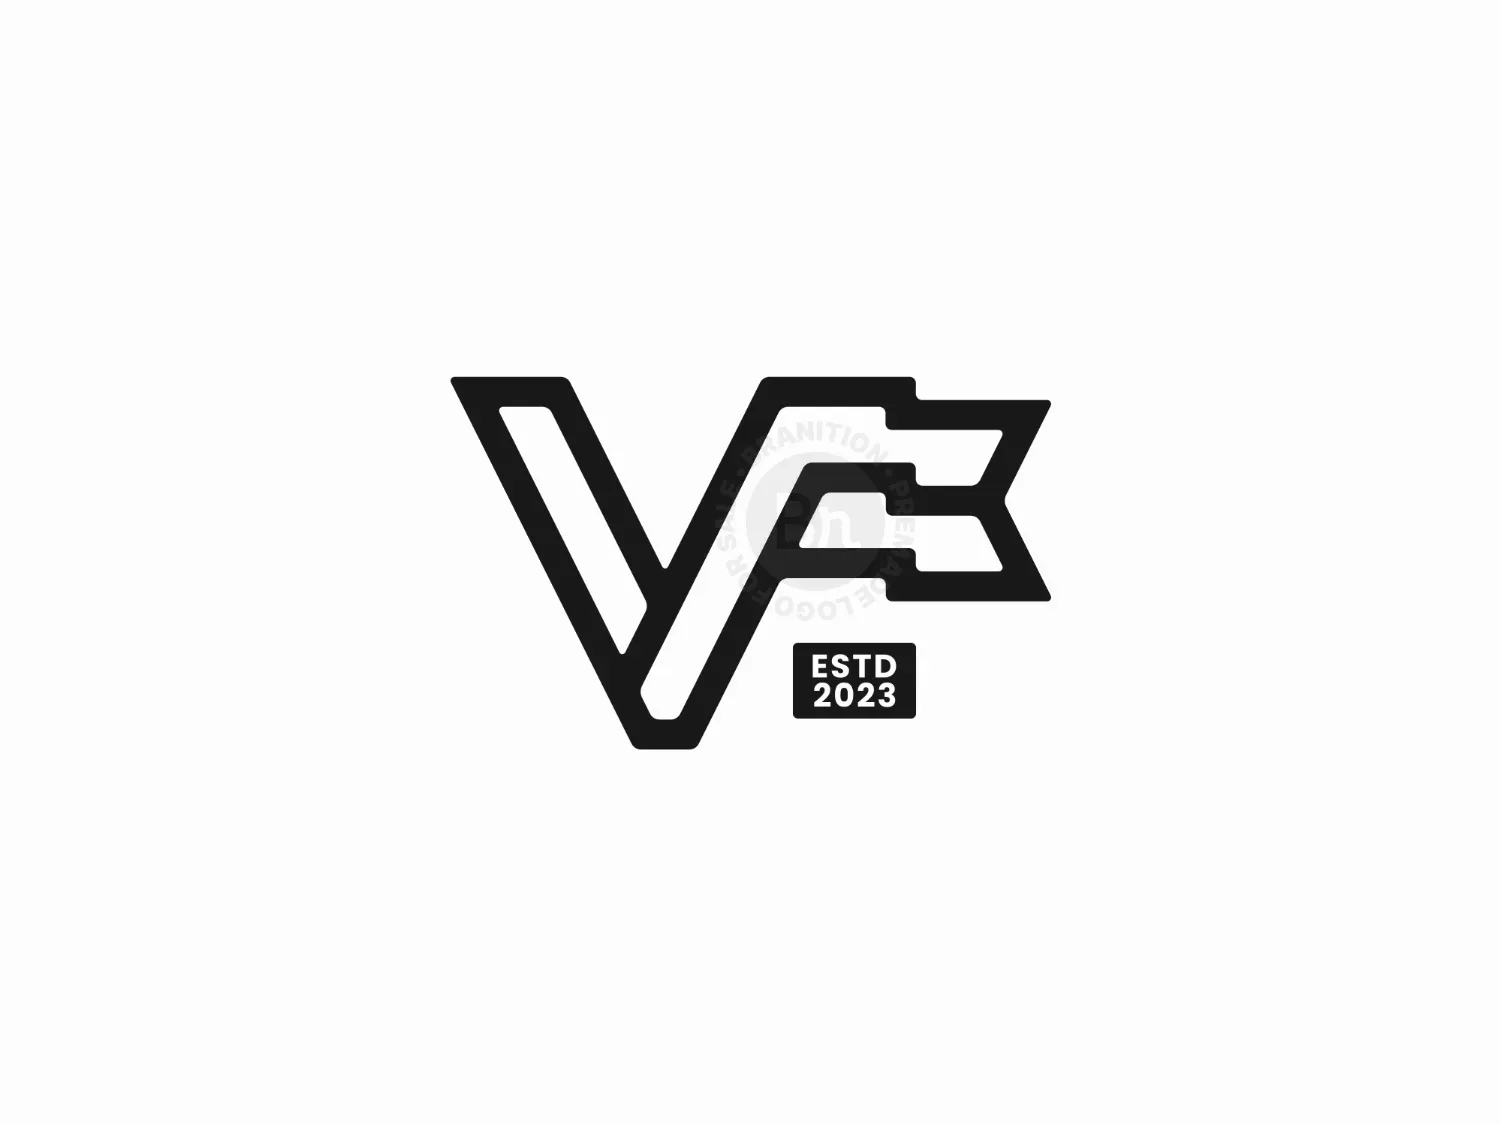 Premium Vector | Luxury initial w wv wiv viv vw viw vv logo design template